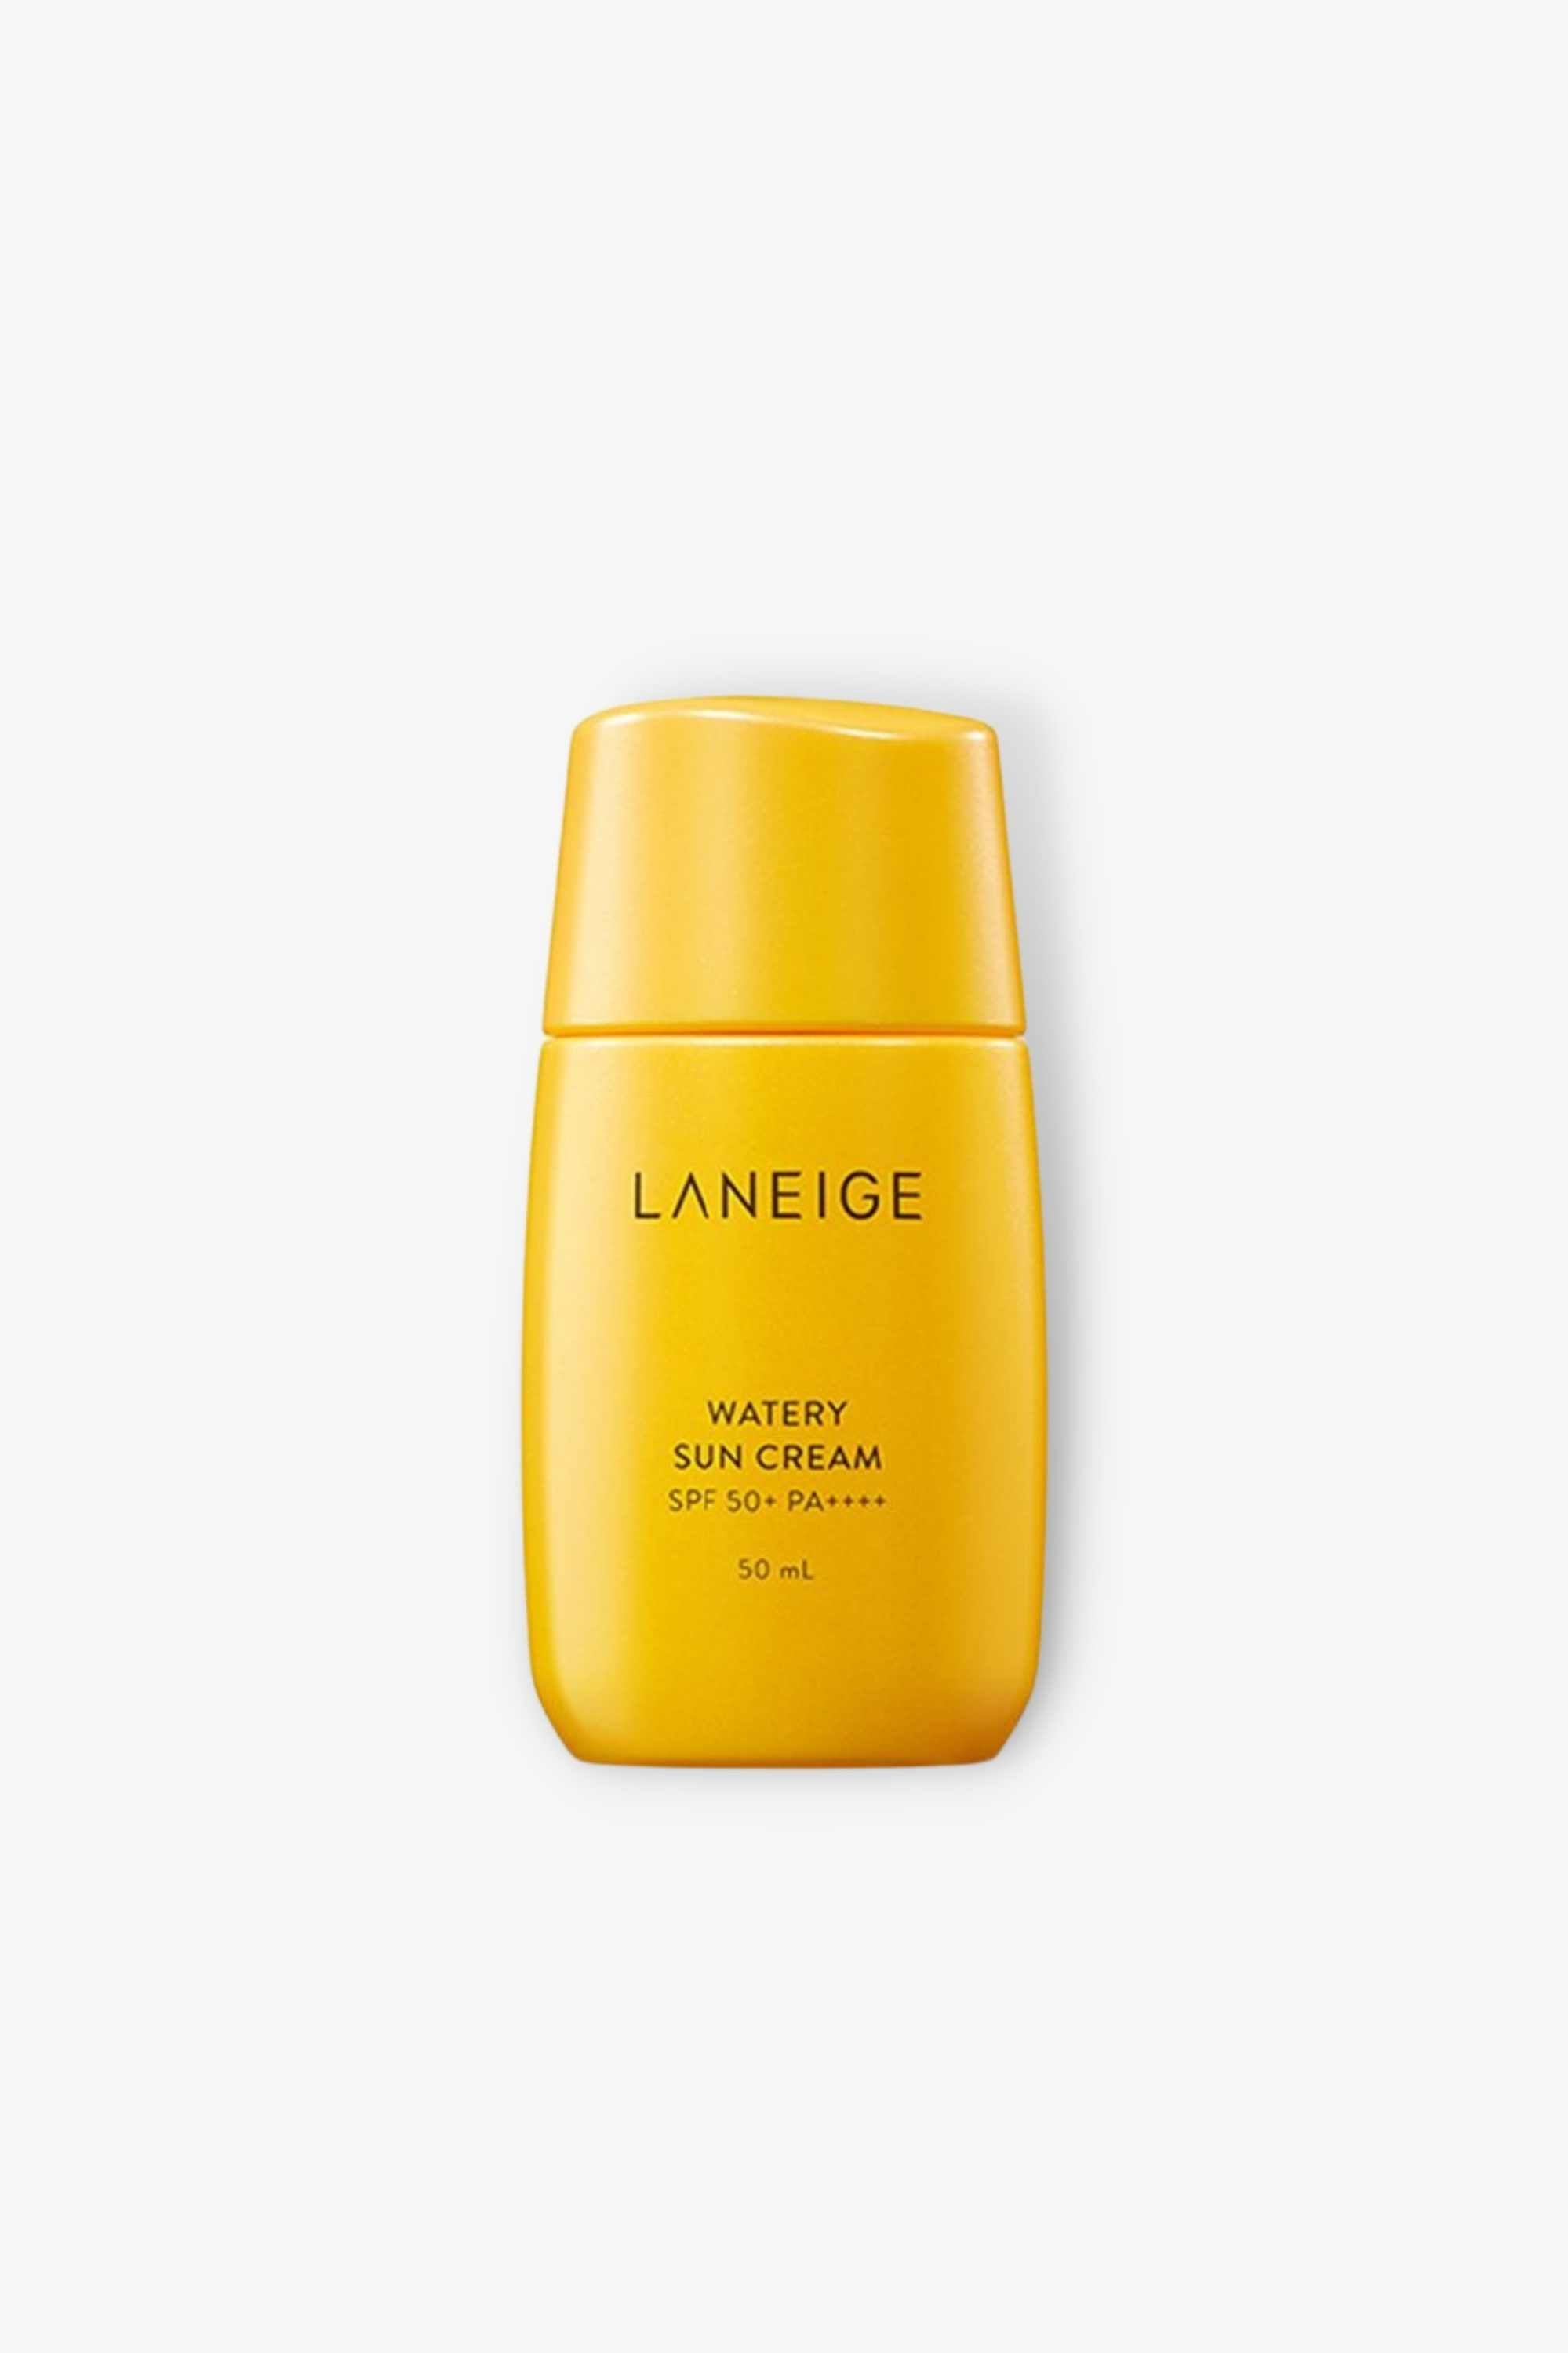 Laneige - Watery Sun Cream SPF50+ PA++++ - 50ml